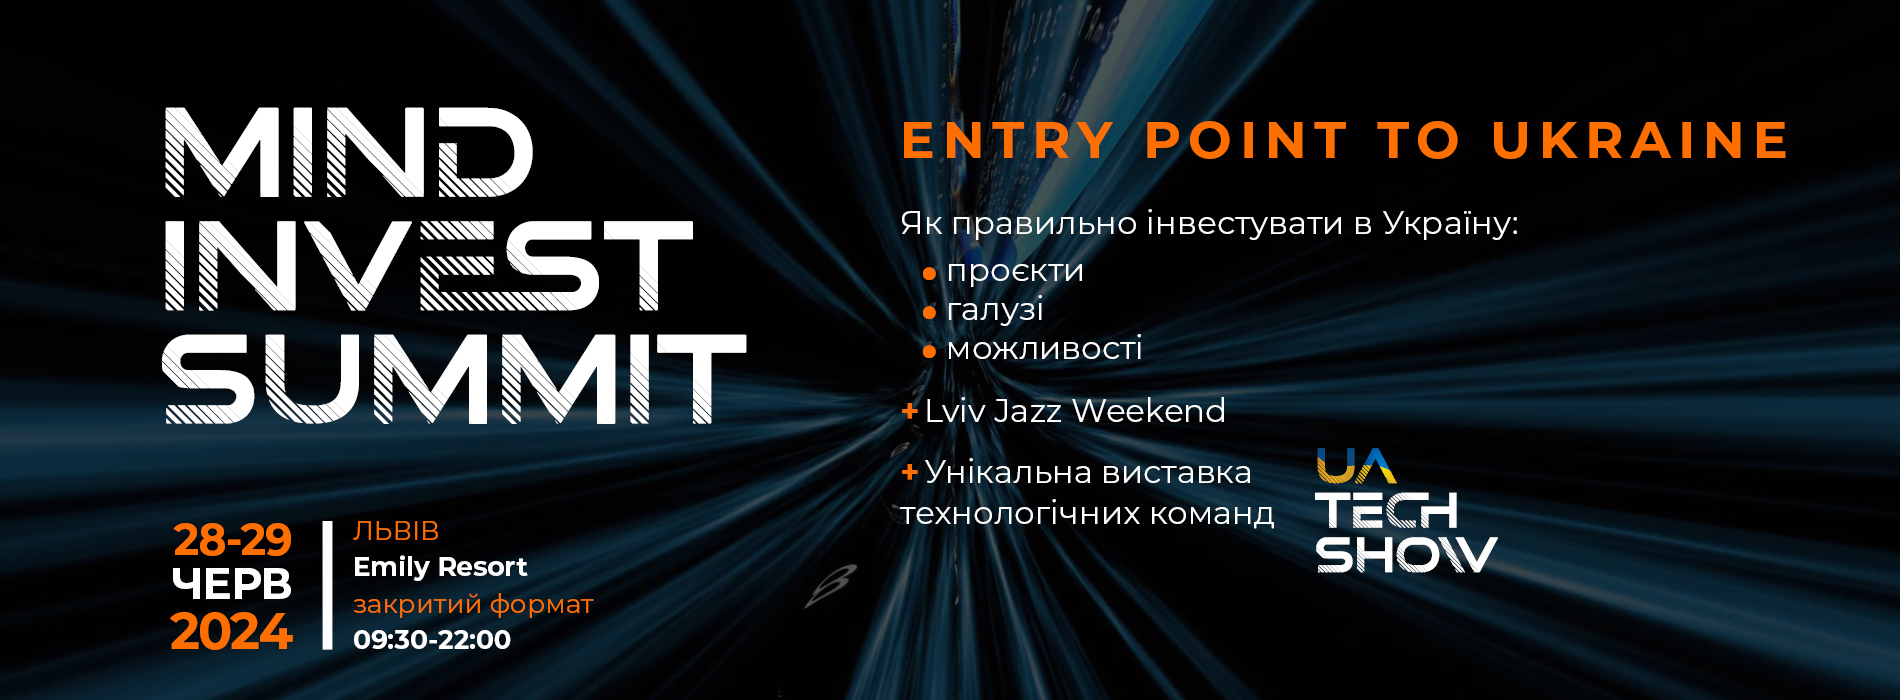 Mind Invest Summit: Entry Point to Ukraine. Як правильно інвестувати в Україну